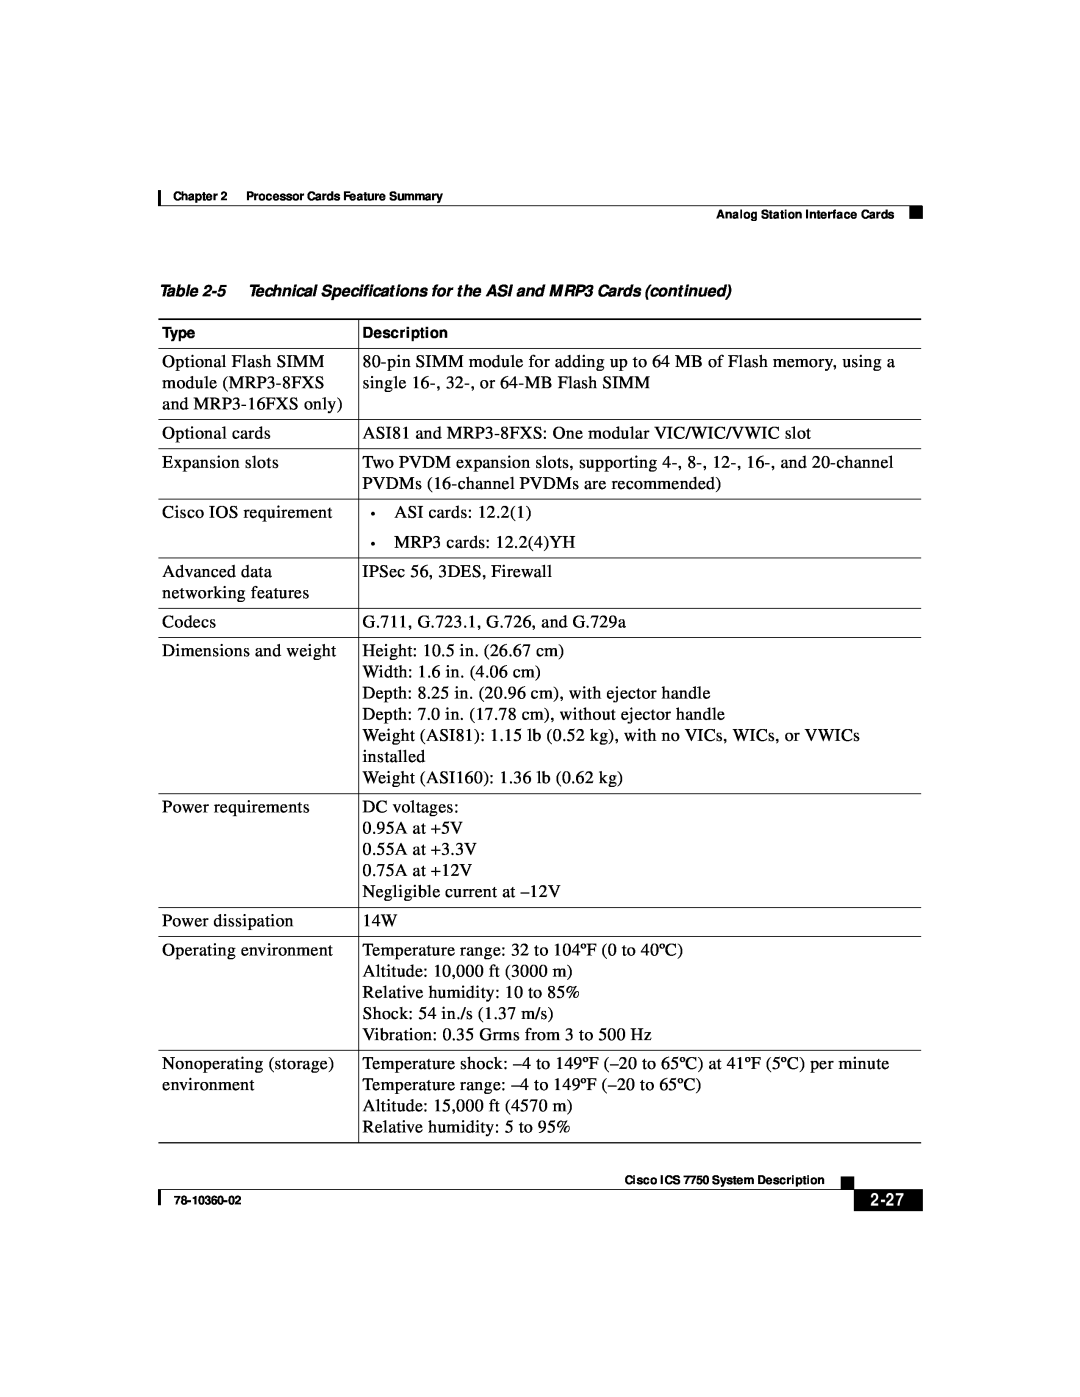 Cisco Systems ICS-7750 manual Type, Description, 2-27 